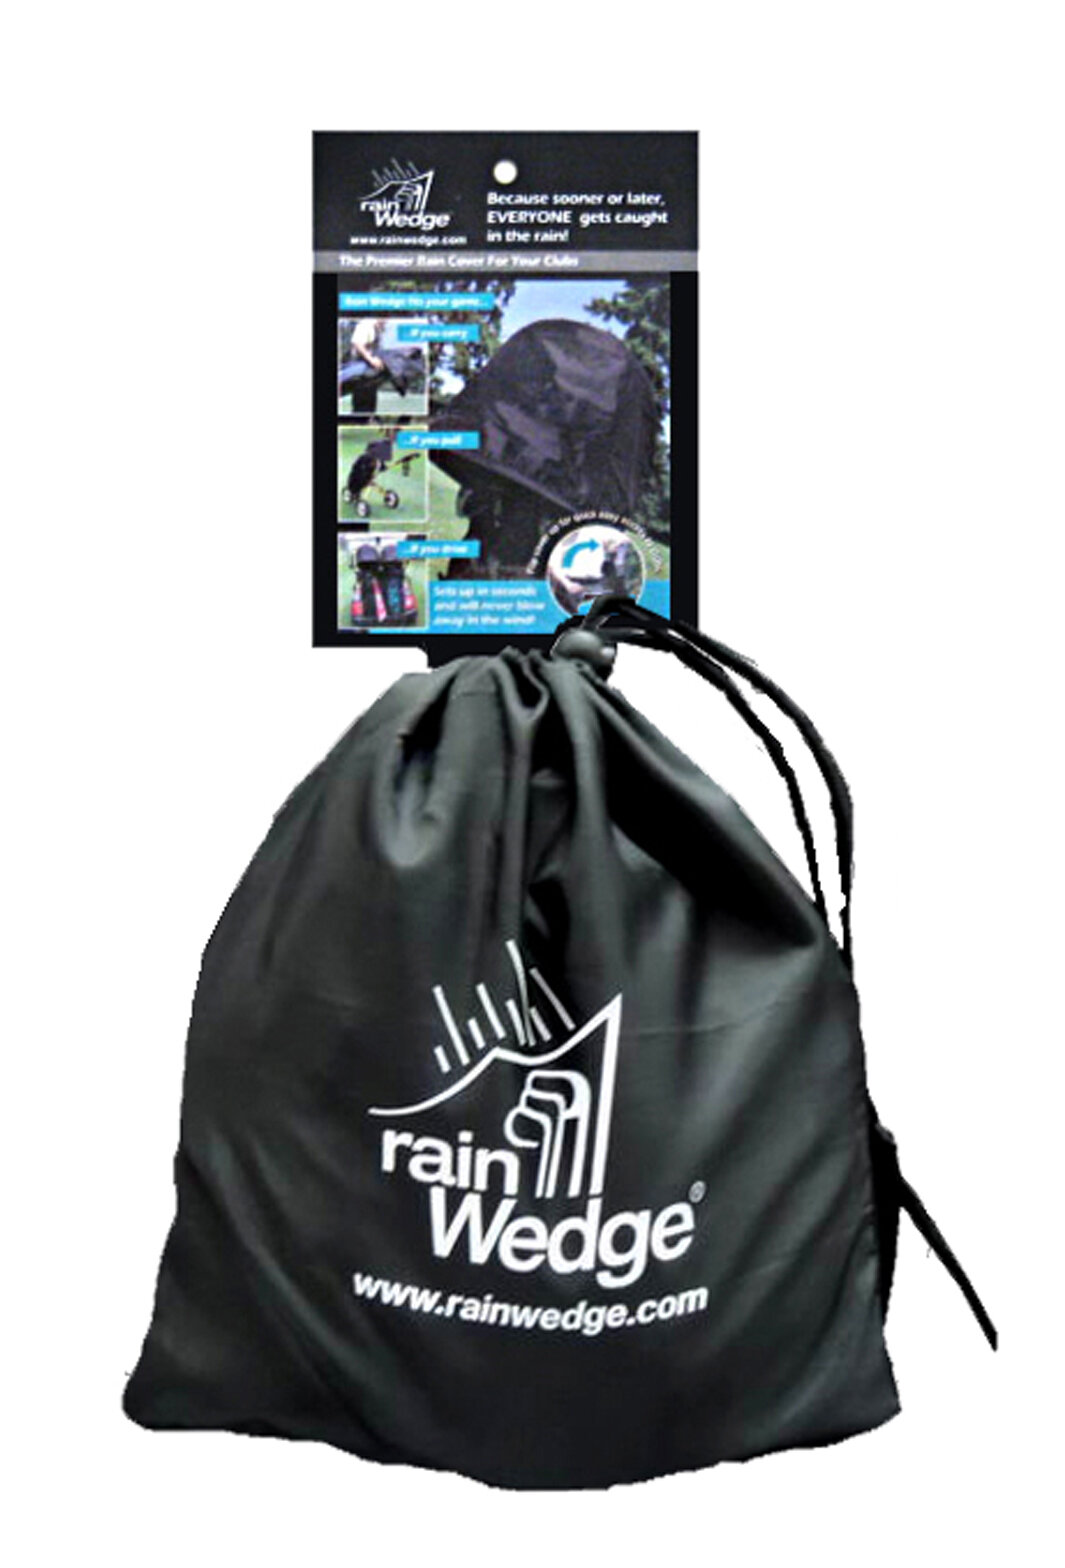 Wedge Saddle Storage Bag for Cycling – Aduro Sport